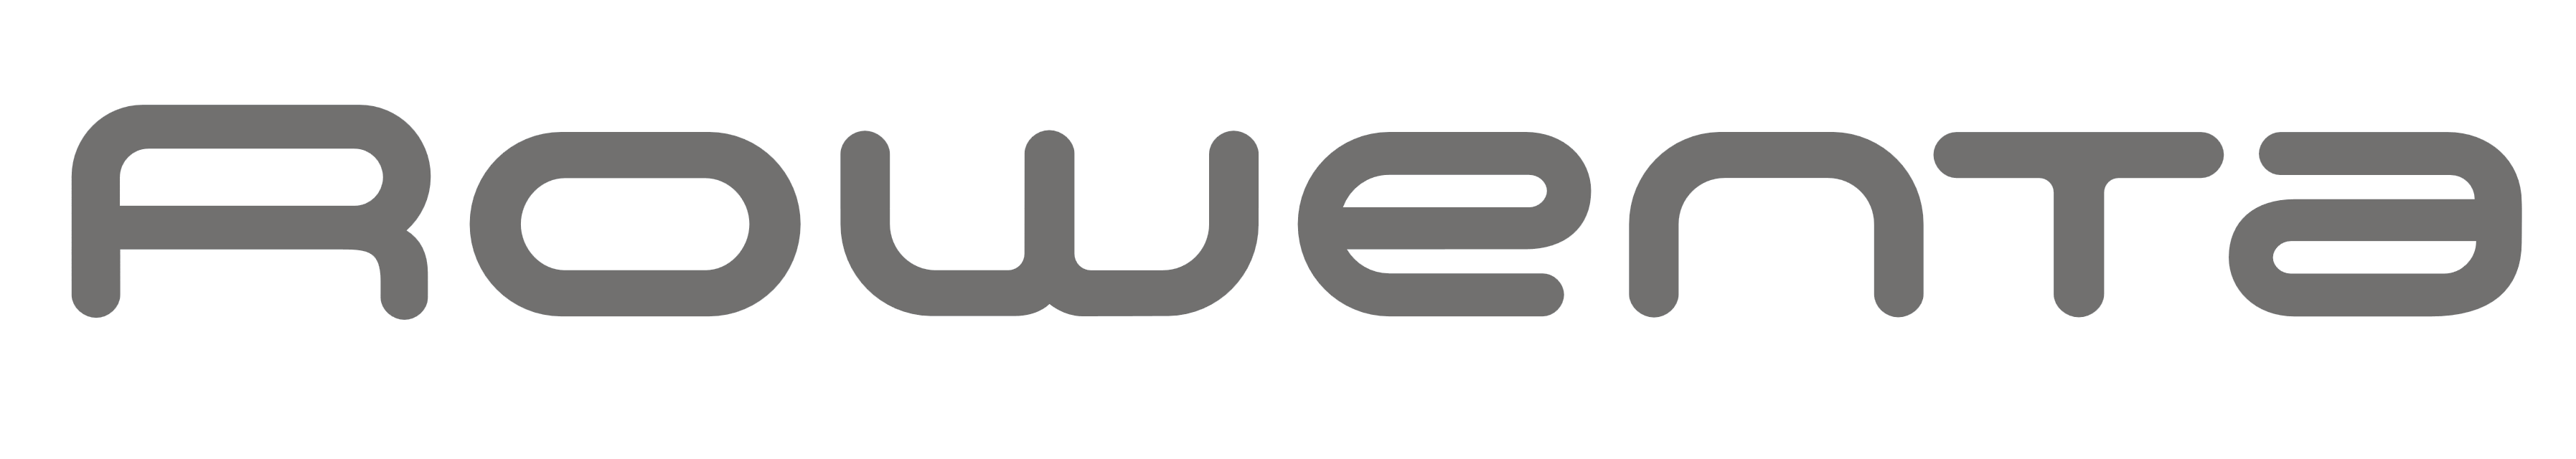 Rowenta logo, logotype